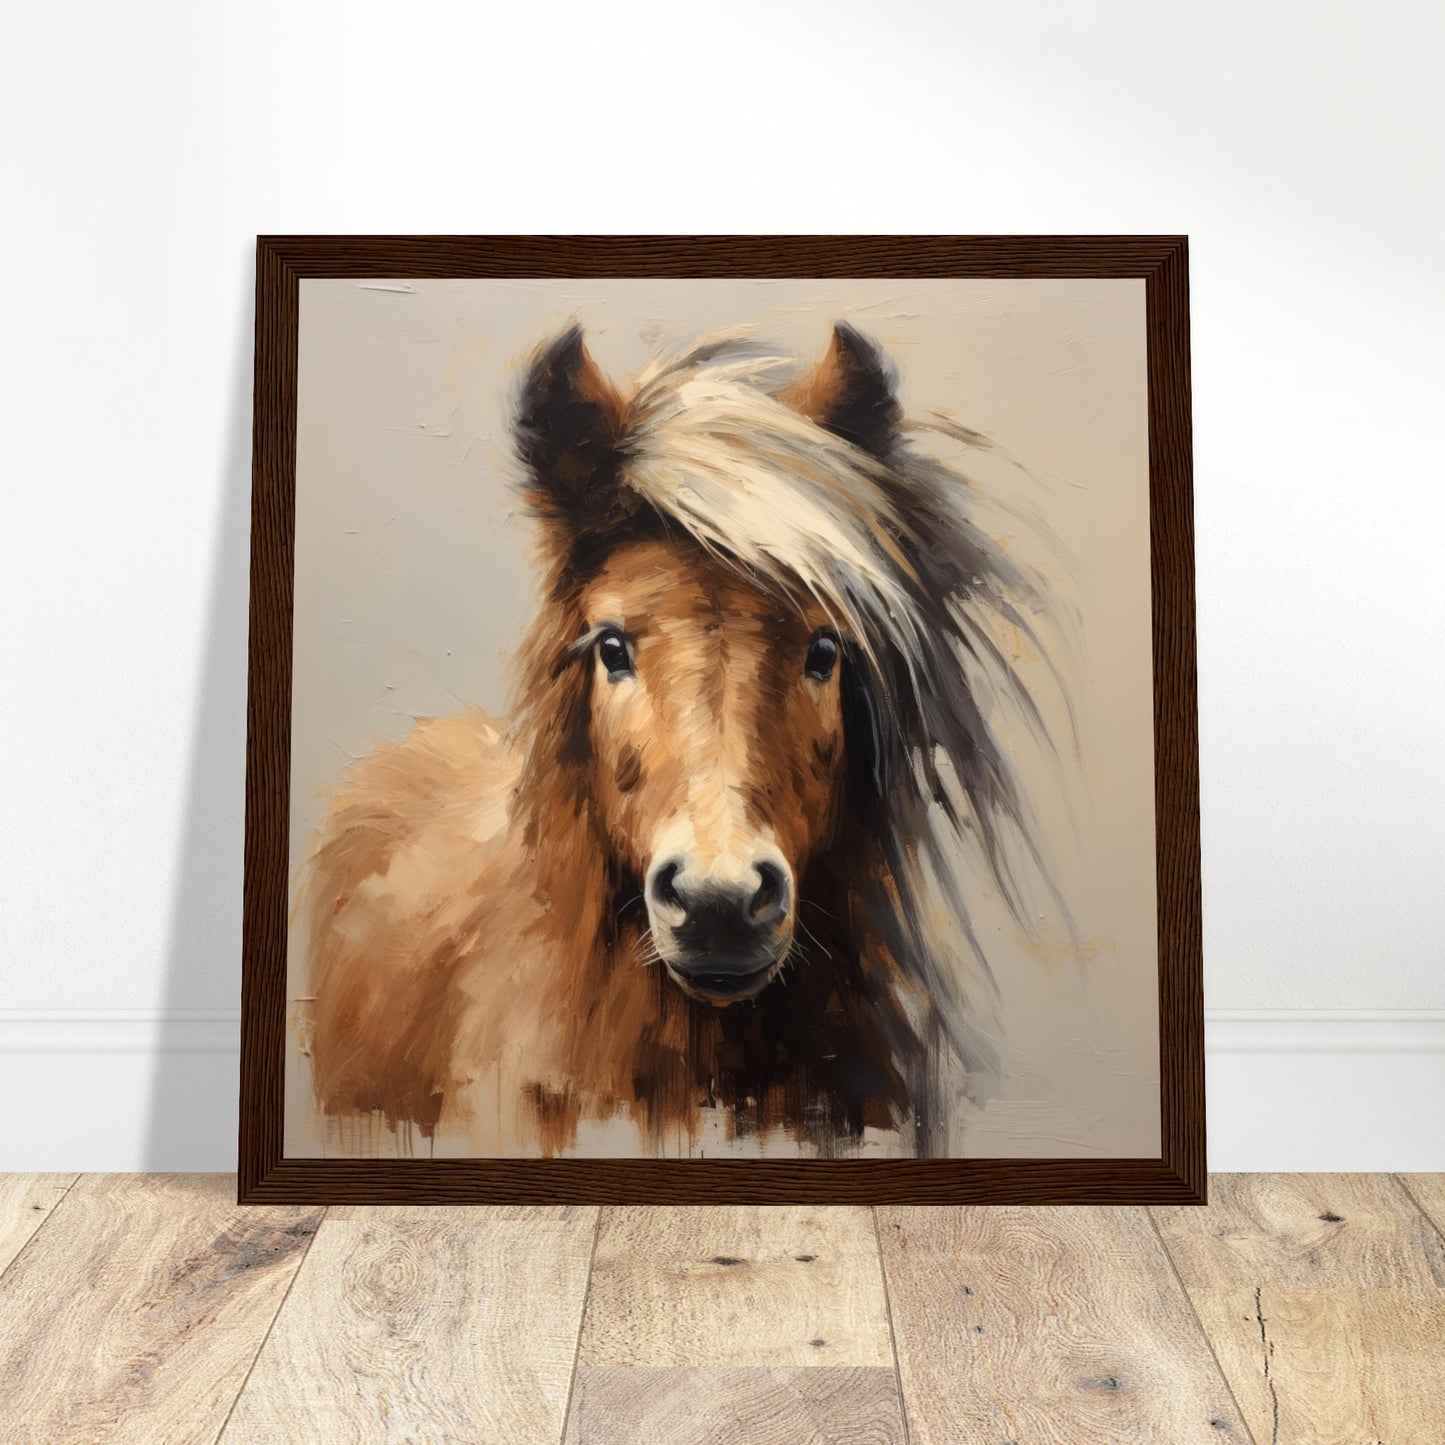 Horse Majesty #14 - Print Room Ltd Black frame 30x30 cm / 12x12"